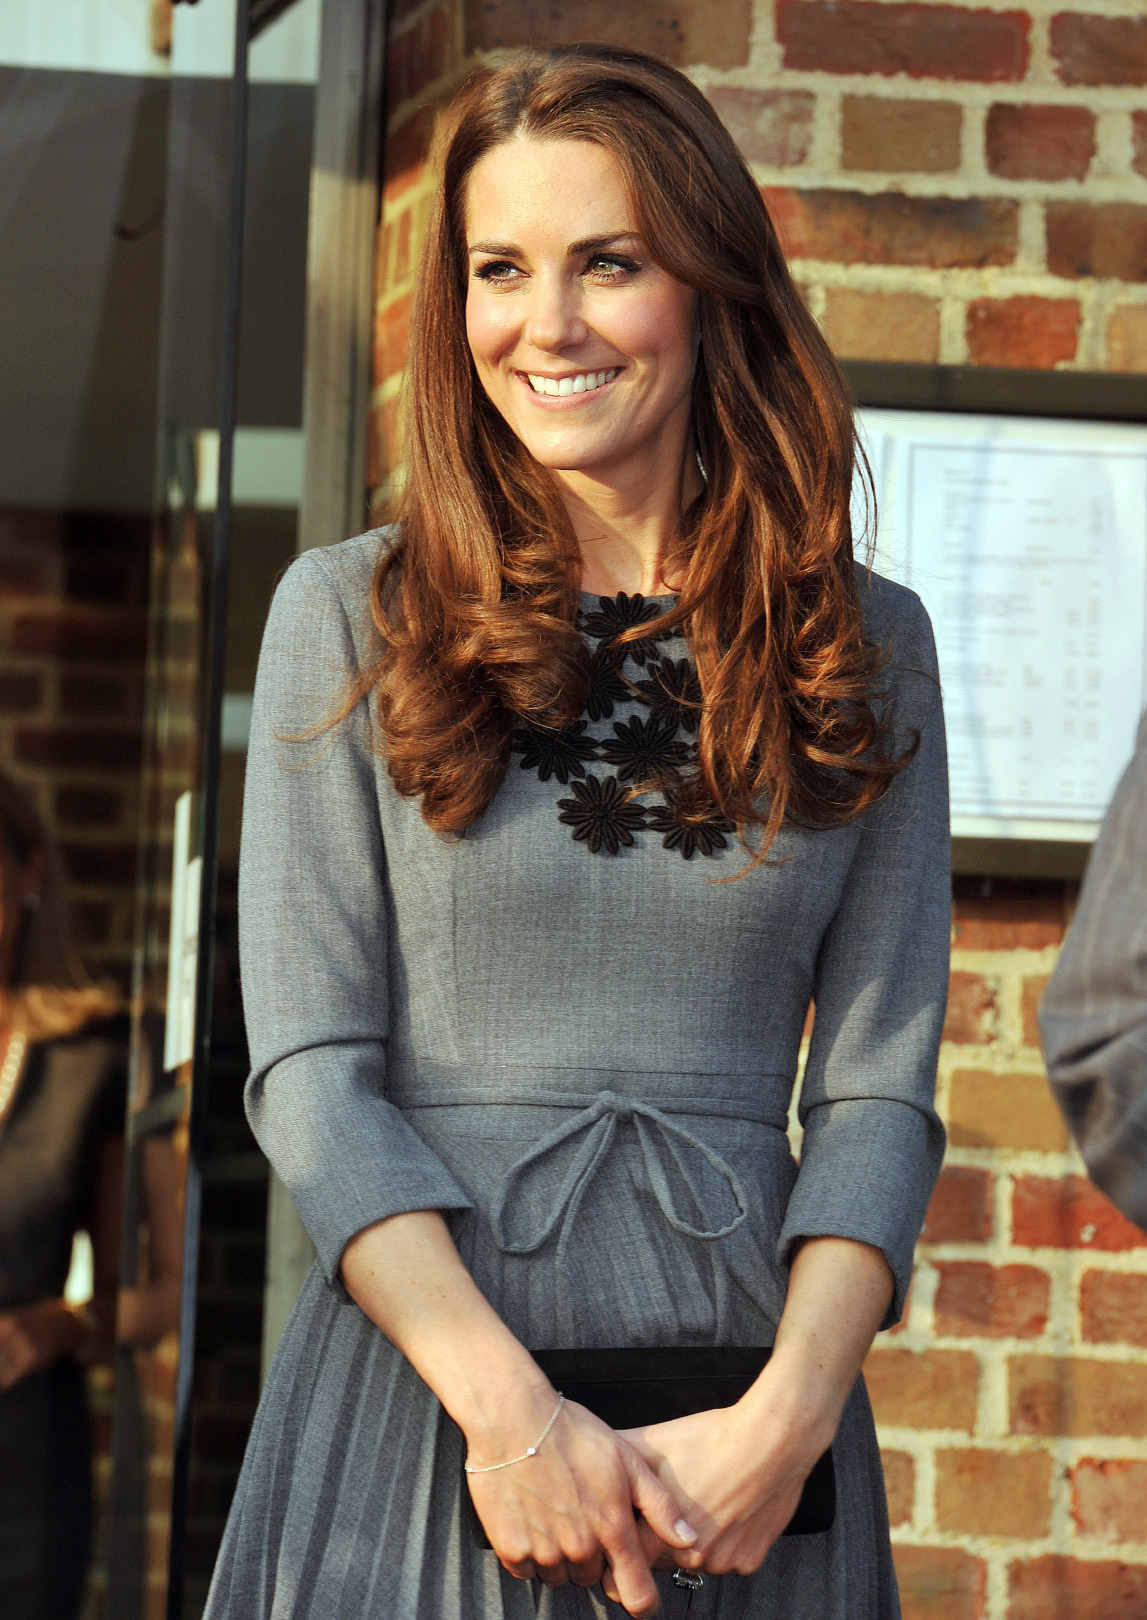 Stil Dosyası: Kate Middleton